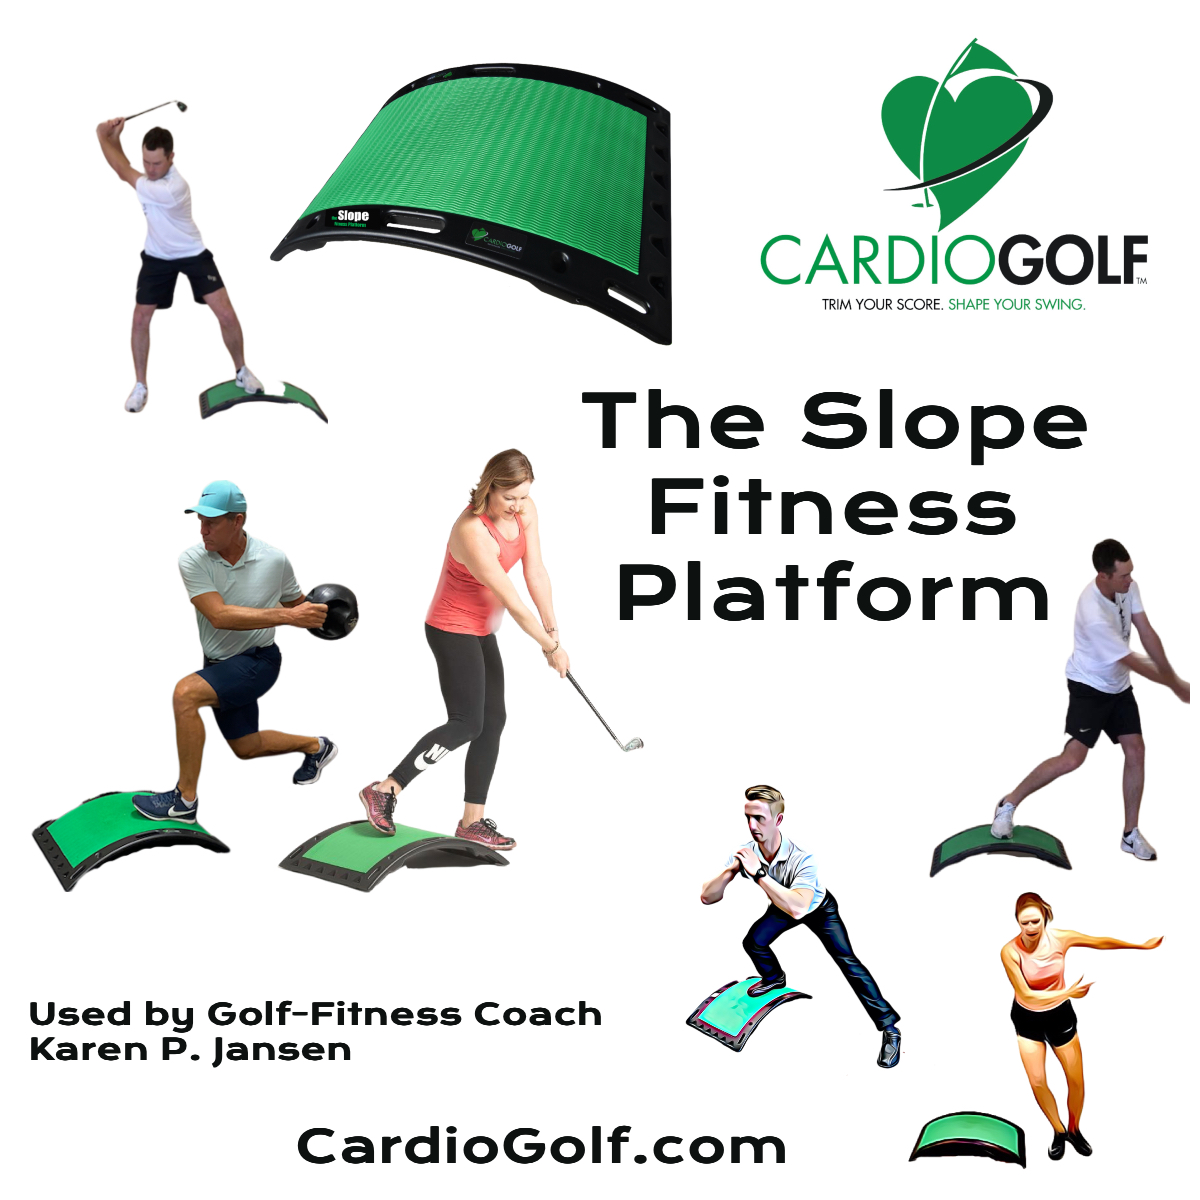 https://www.cardiogolf.com/product/cardiogolf-slope-fitness-platform/